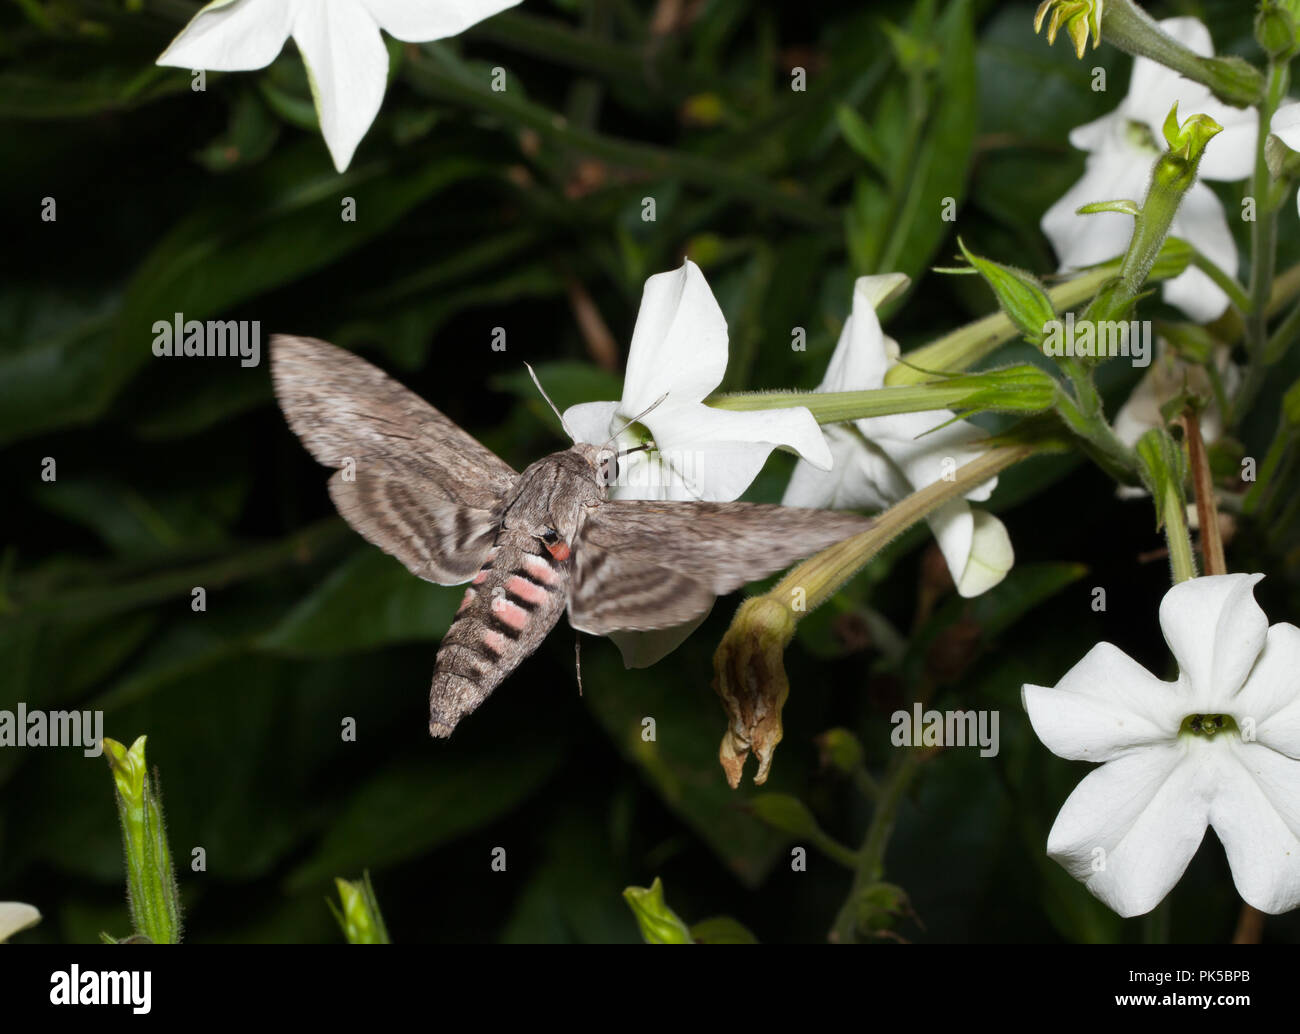 Convolvulus hawk-moth feeding on jasmine tobacco Stock Photo